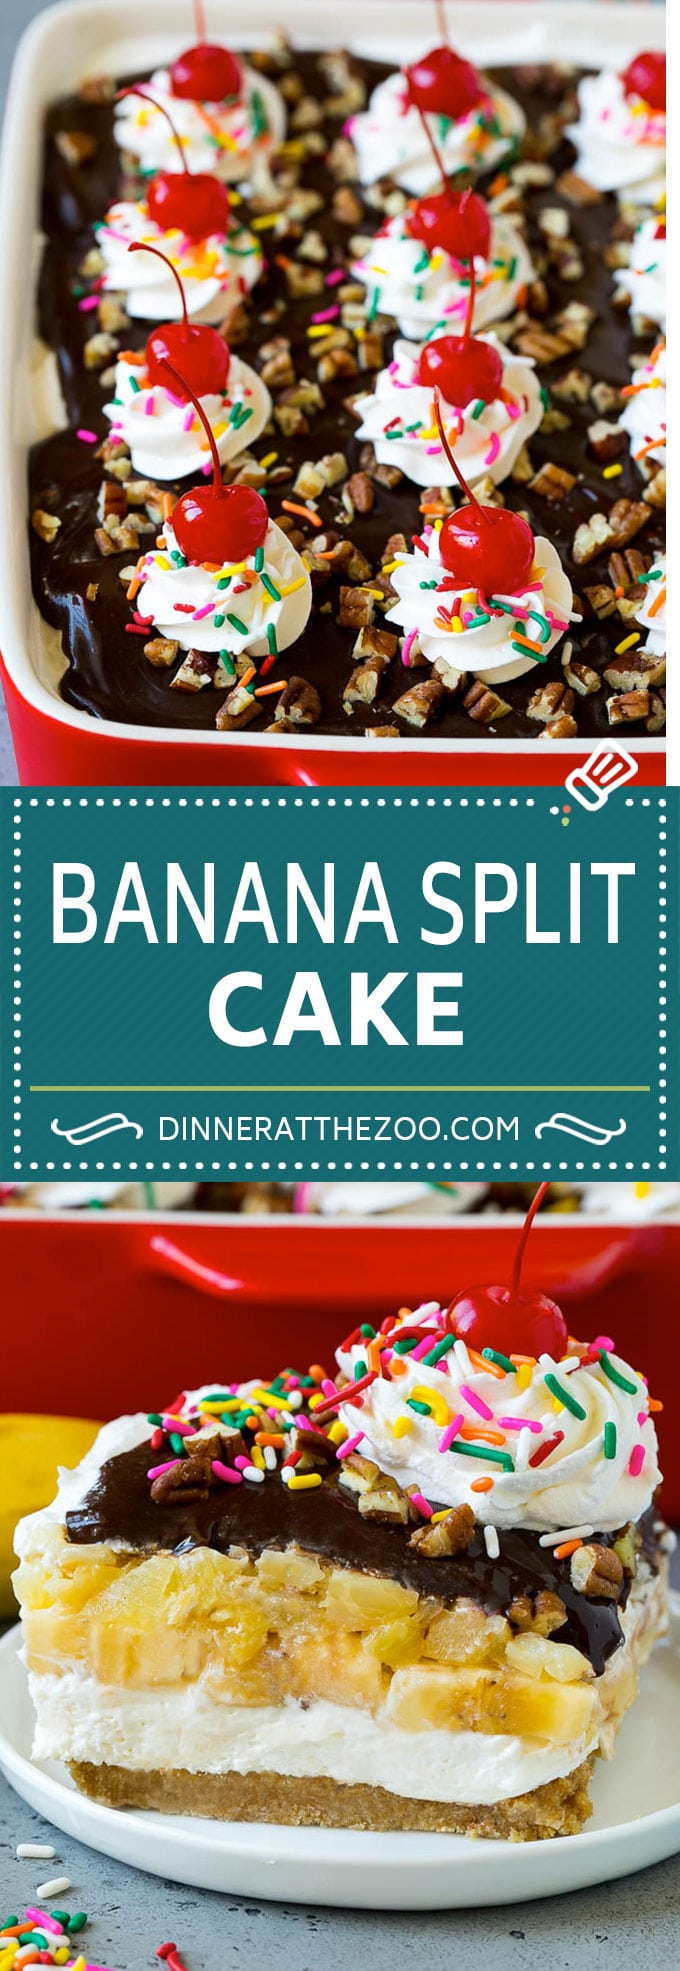 Banana Split Cake Recipe | No Bake Cake | Banana Split Dessert #banana #chocolate #nobake #cake #cheesecake #dinneratthezoo